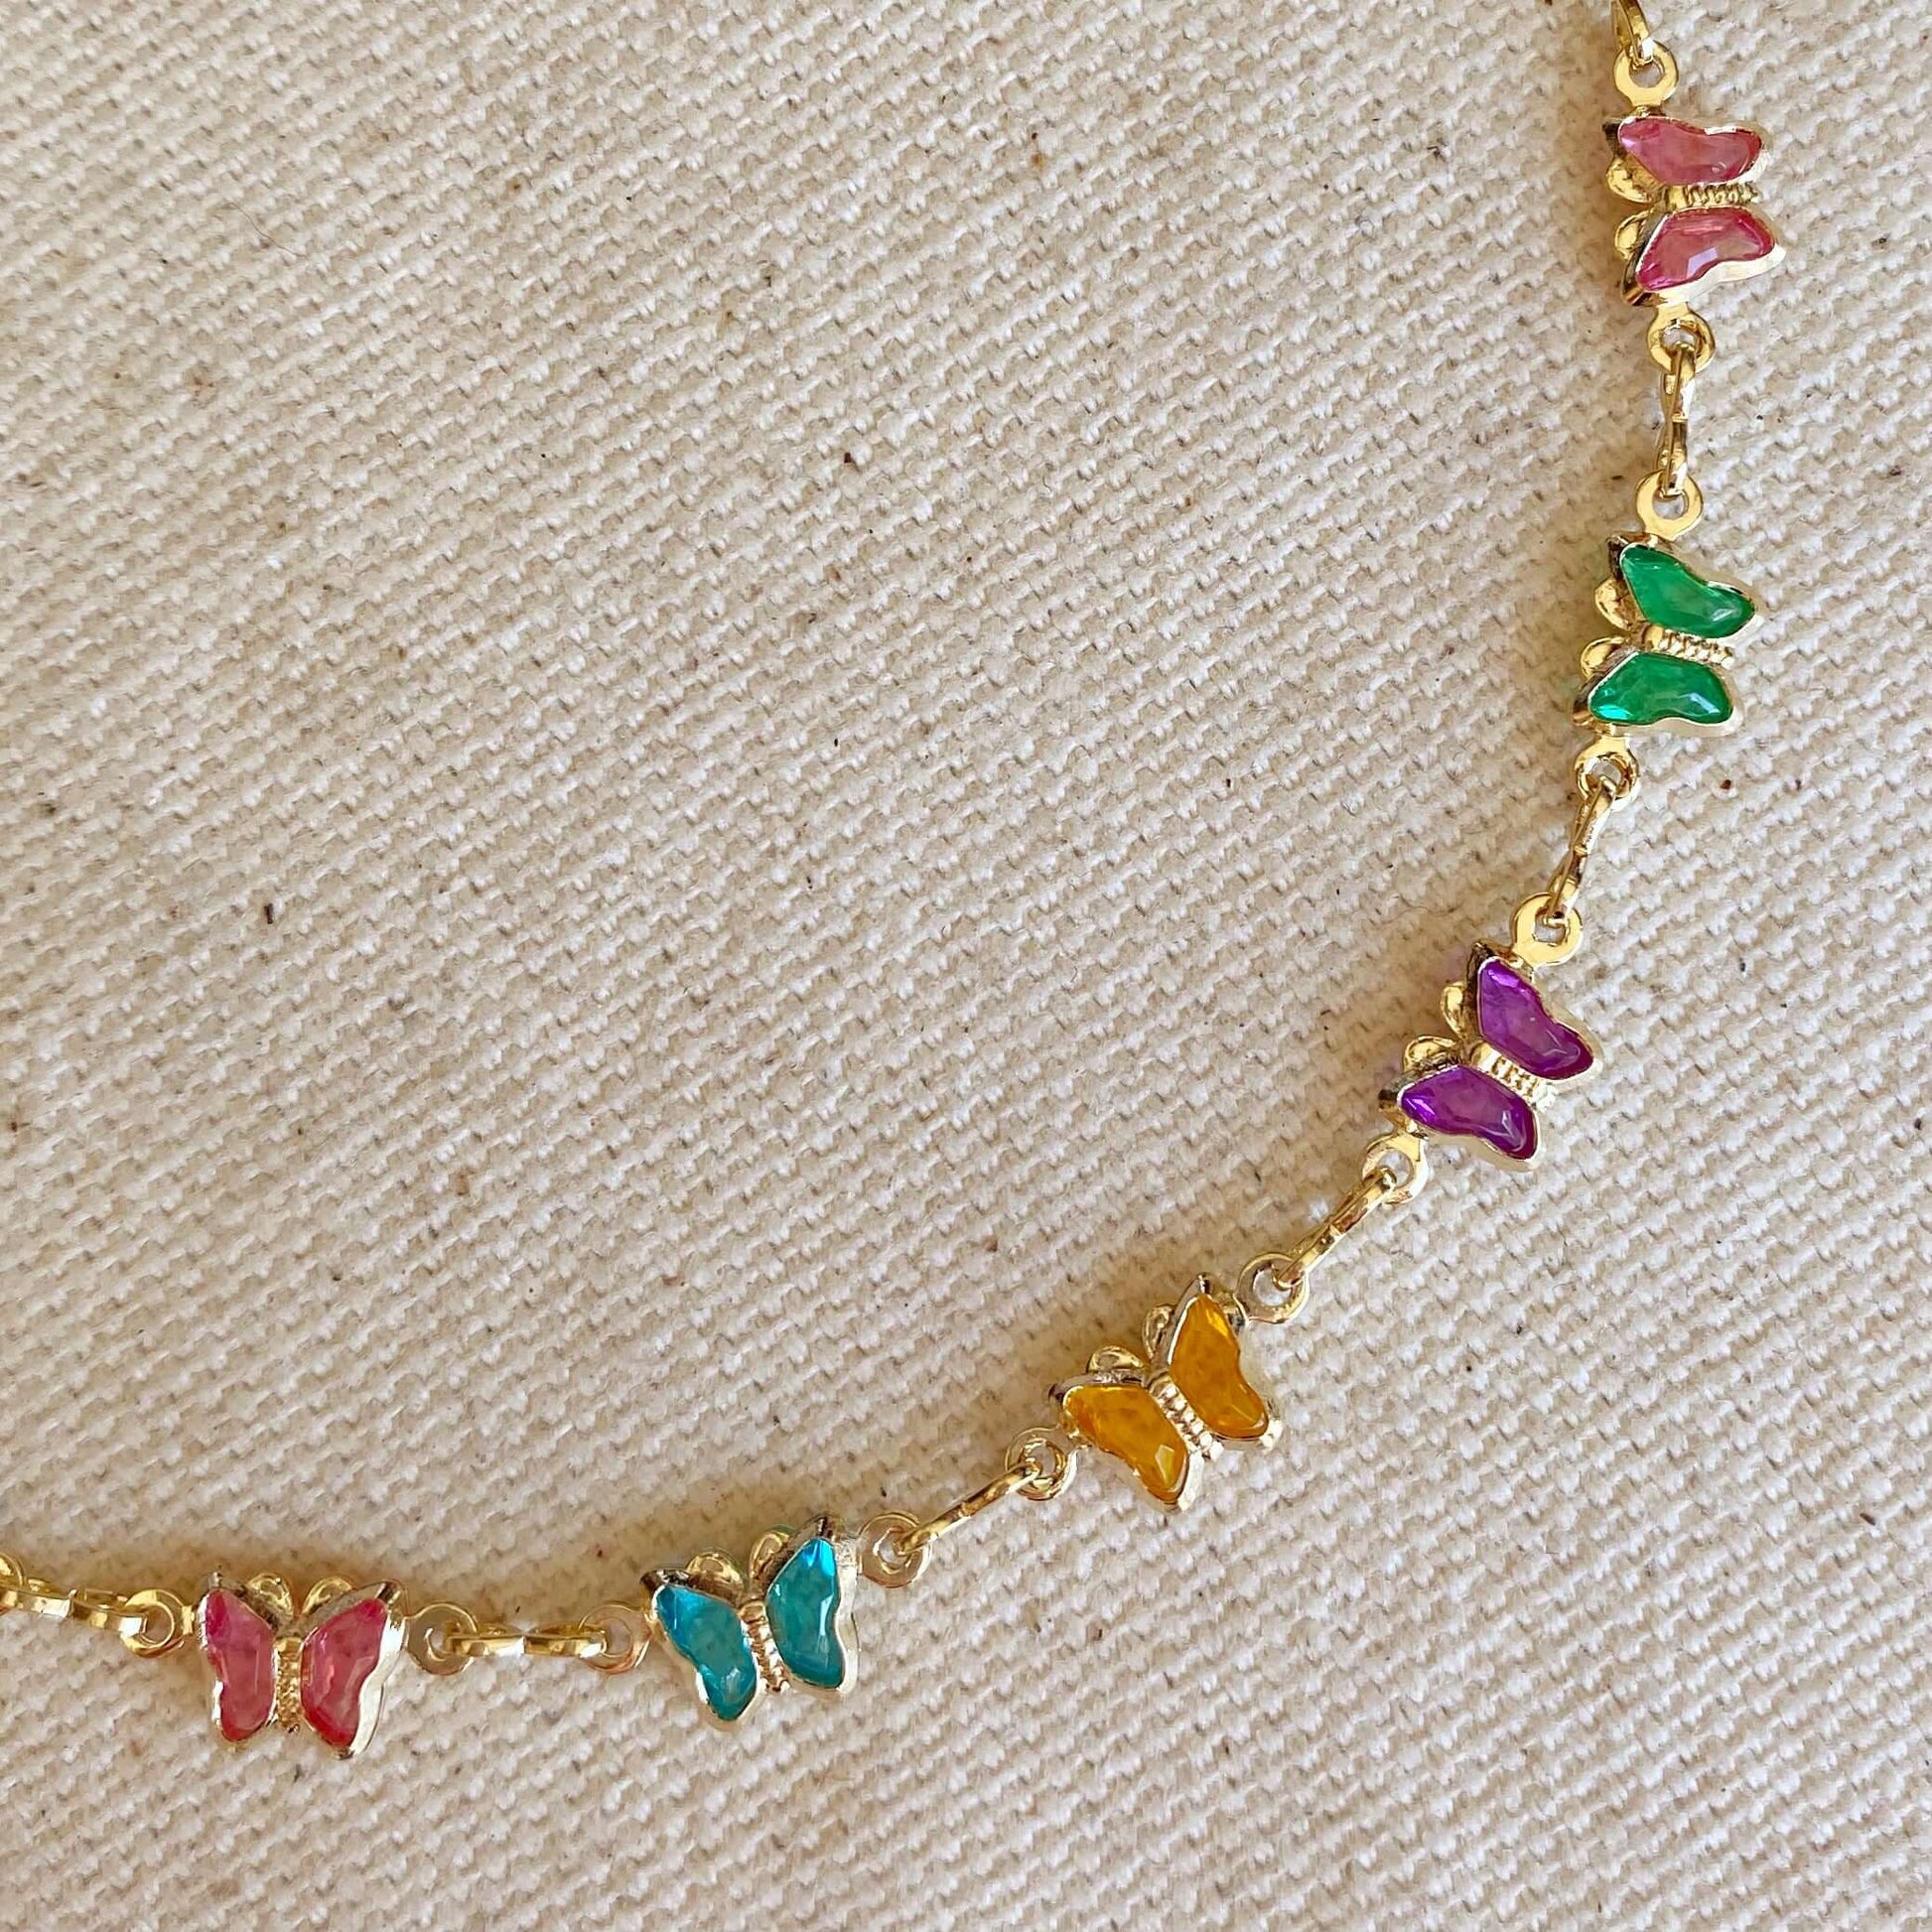 GoldFi 18k Gold Filled Colorful Butterflies Bracelet